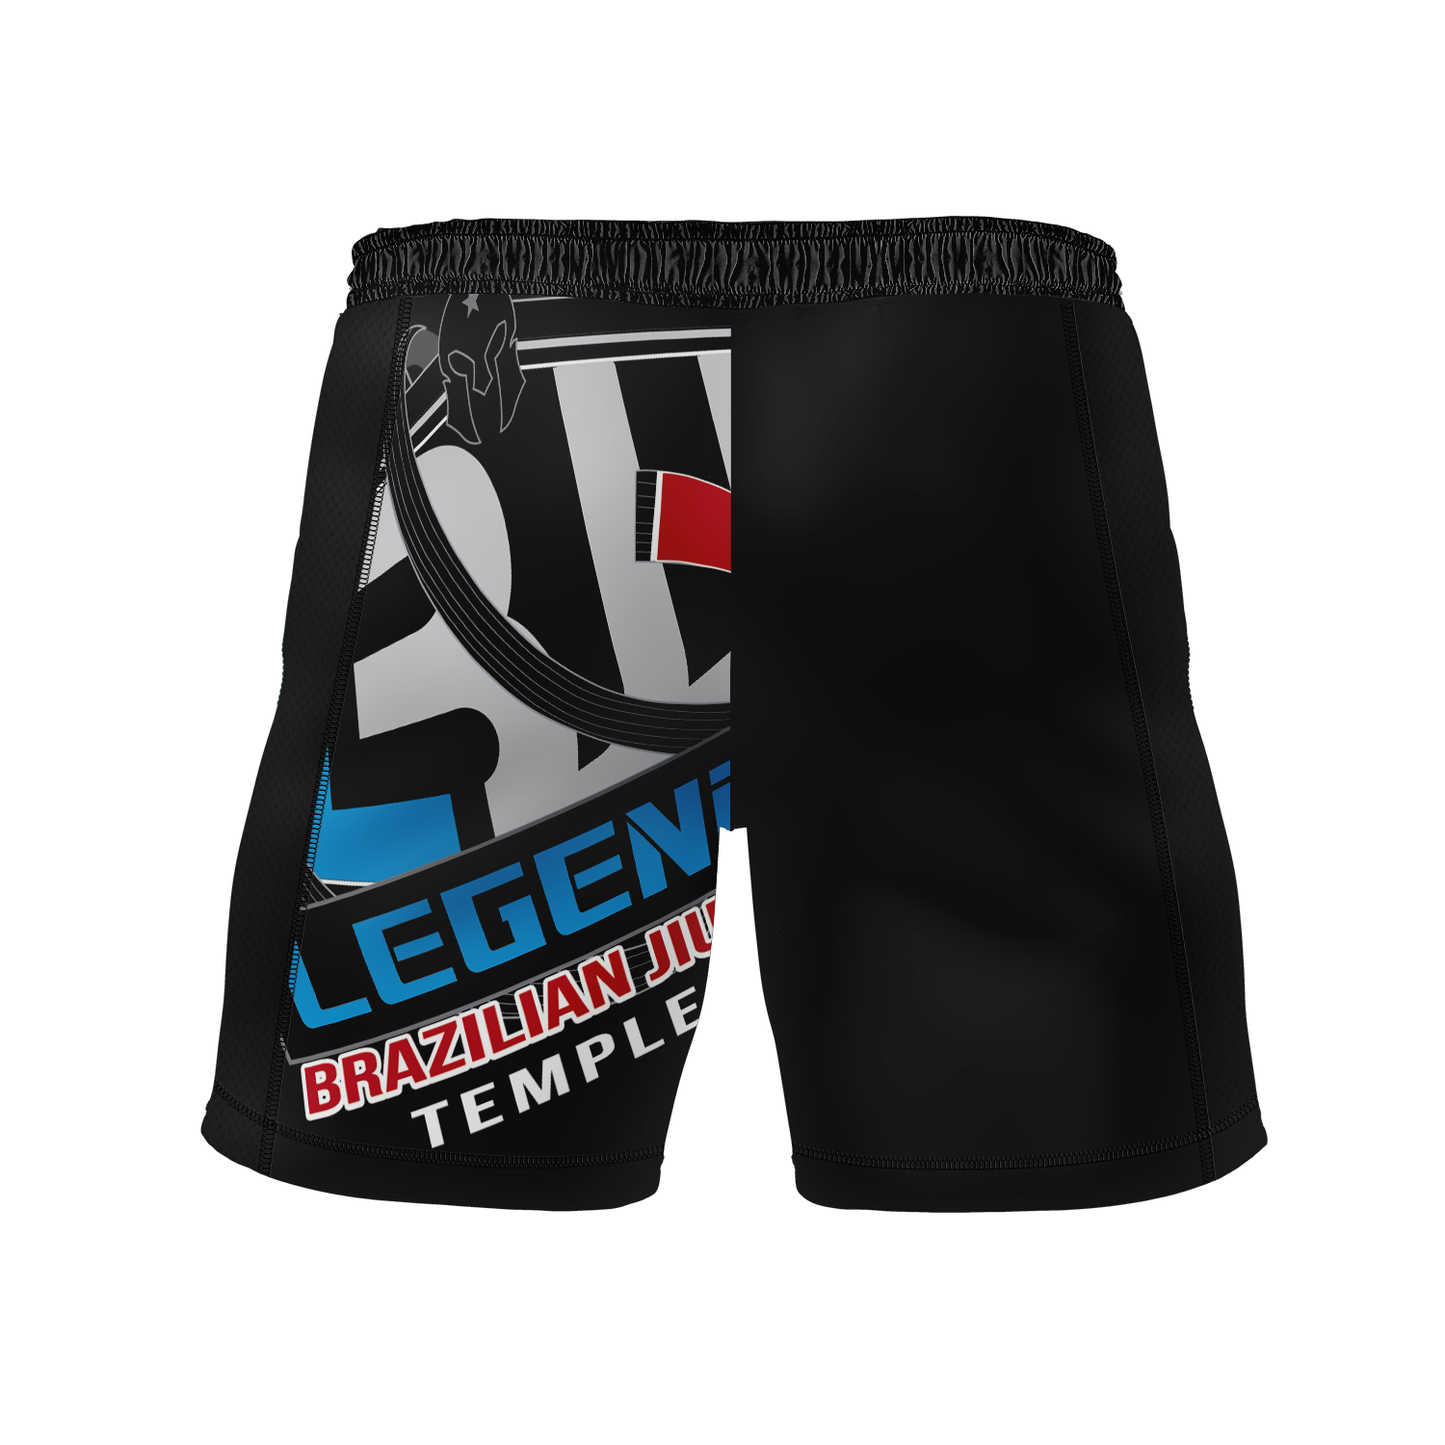 Legends BJJ men's fight shorts Standard Issue, black